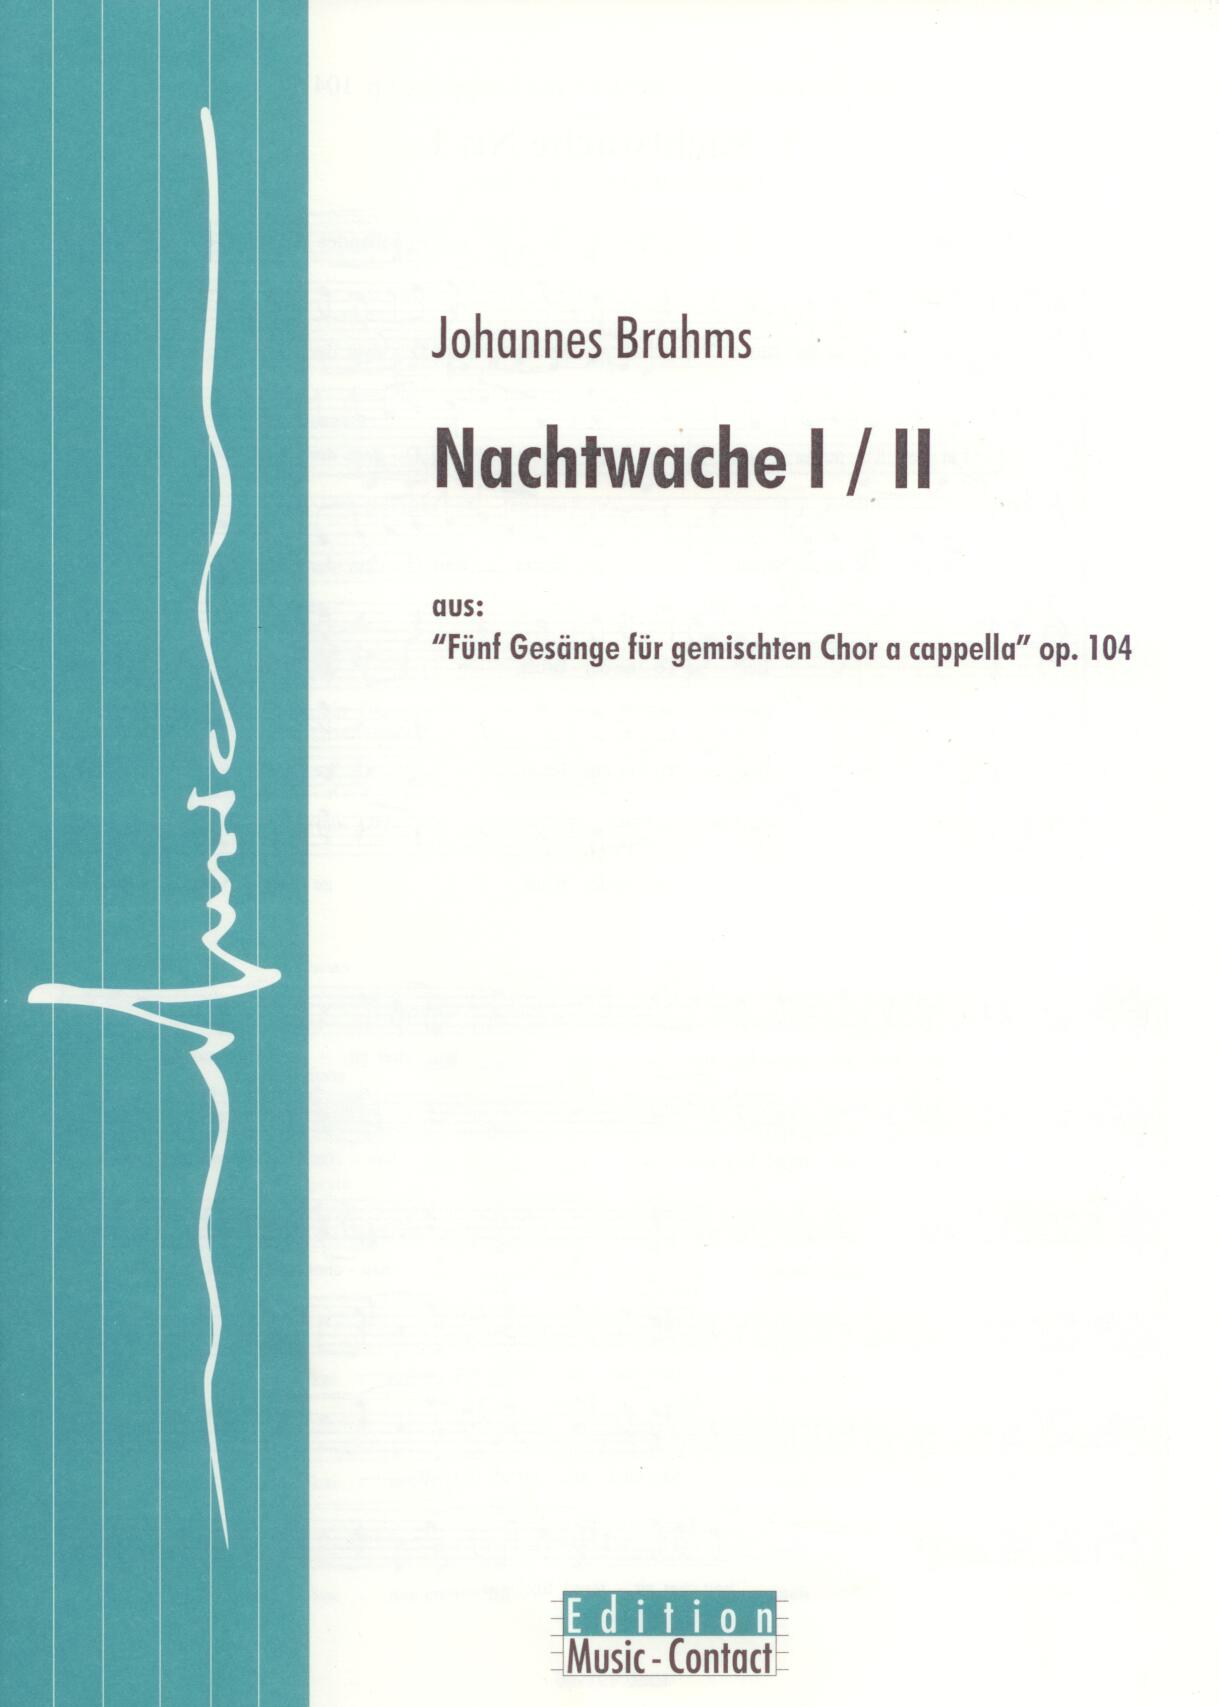 Nachtwache I/II - Show sample score